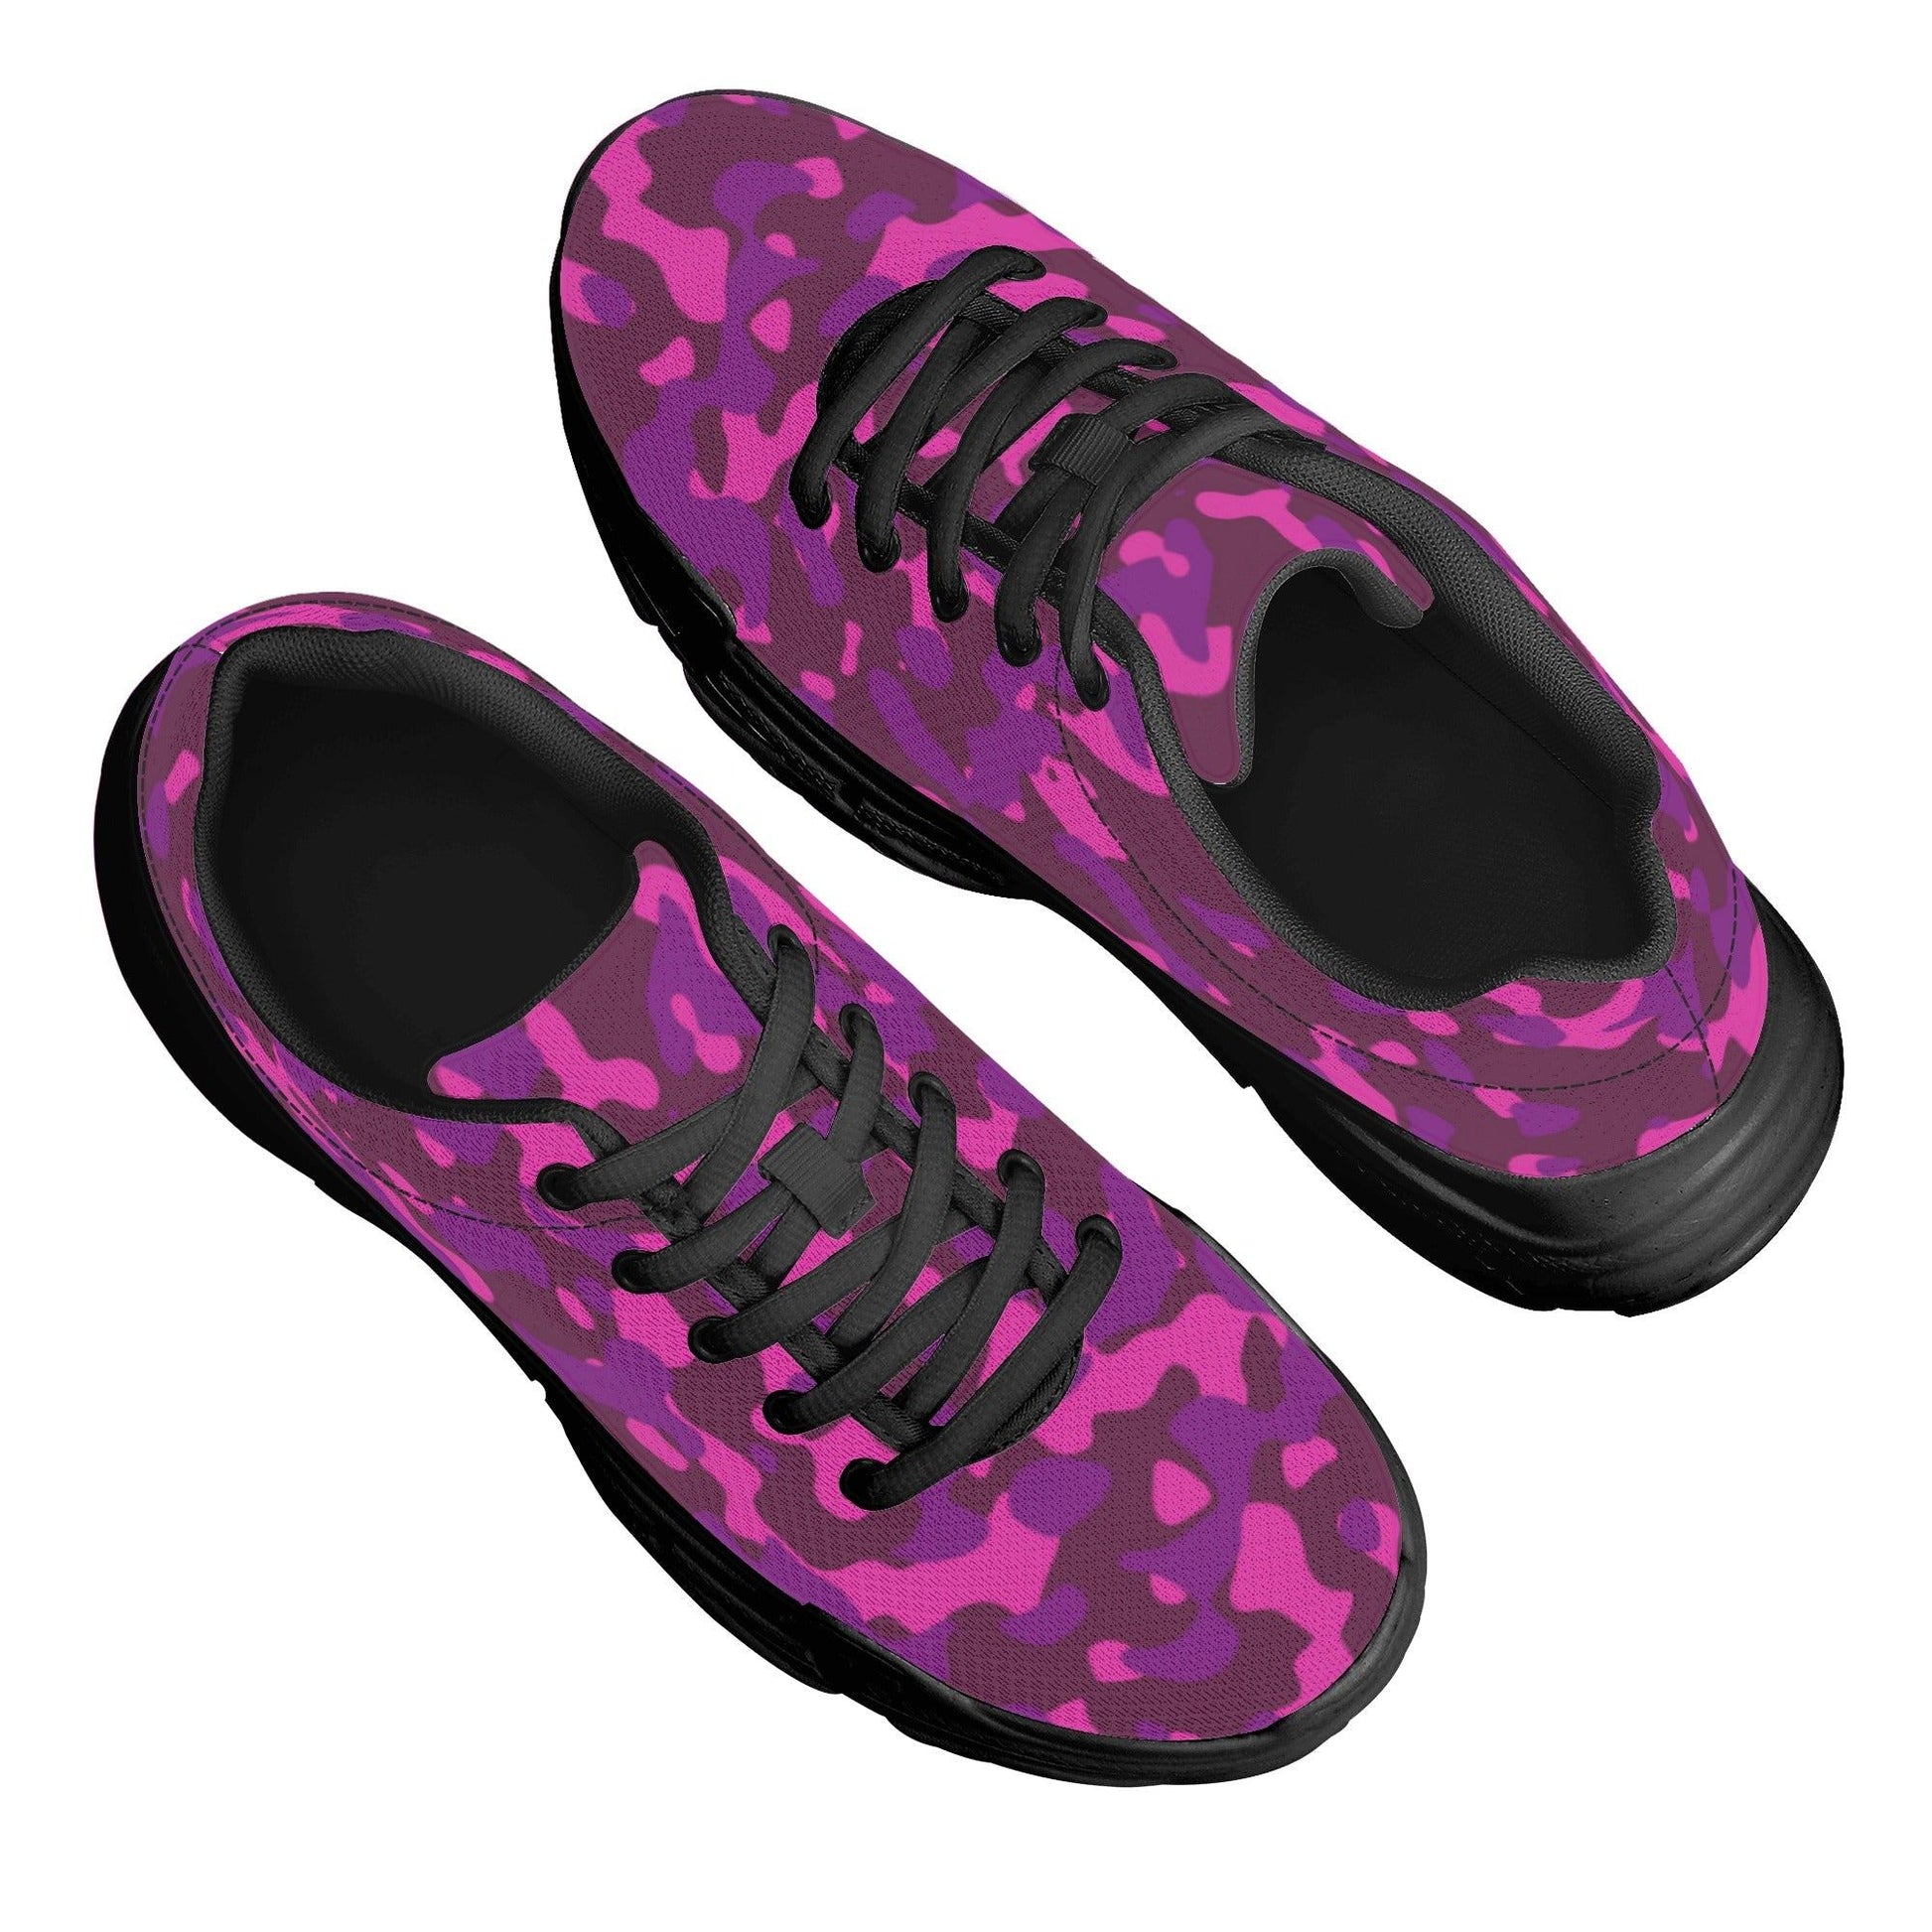 Pink Camouflage Herren Chunky Sneakers Schuhe 79.99 Camouflage, Herren, Pink, Schuhe, Sneaker JLR Design